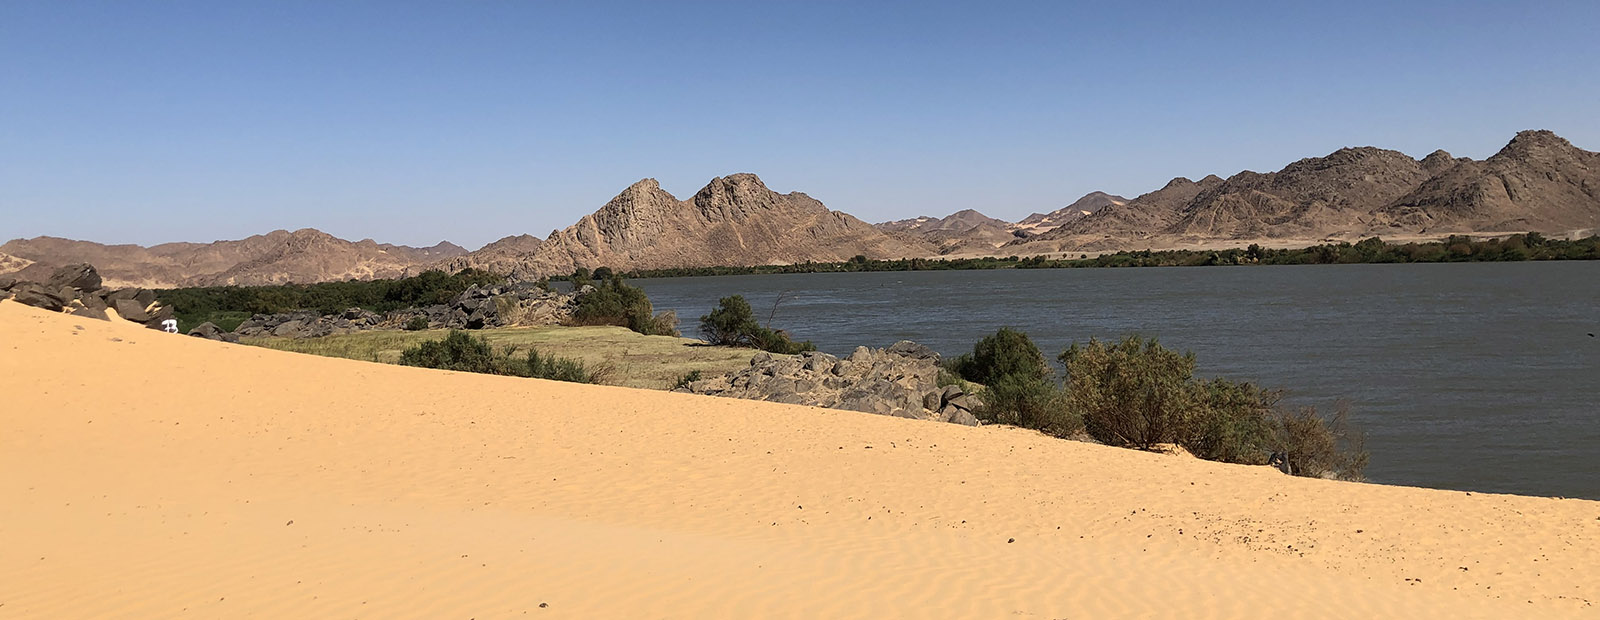 Paddling the Nile, Part 3: The Long Way Up